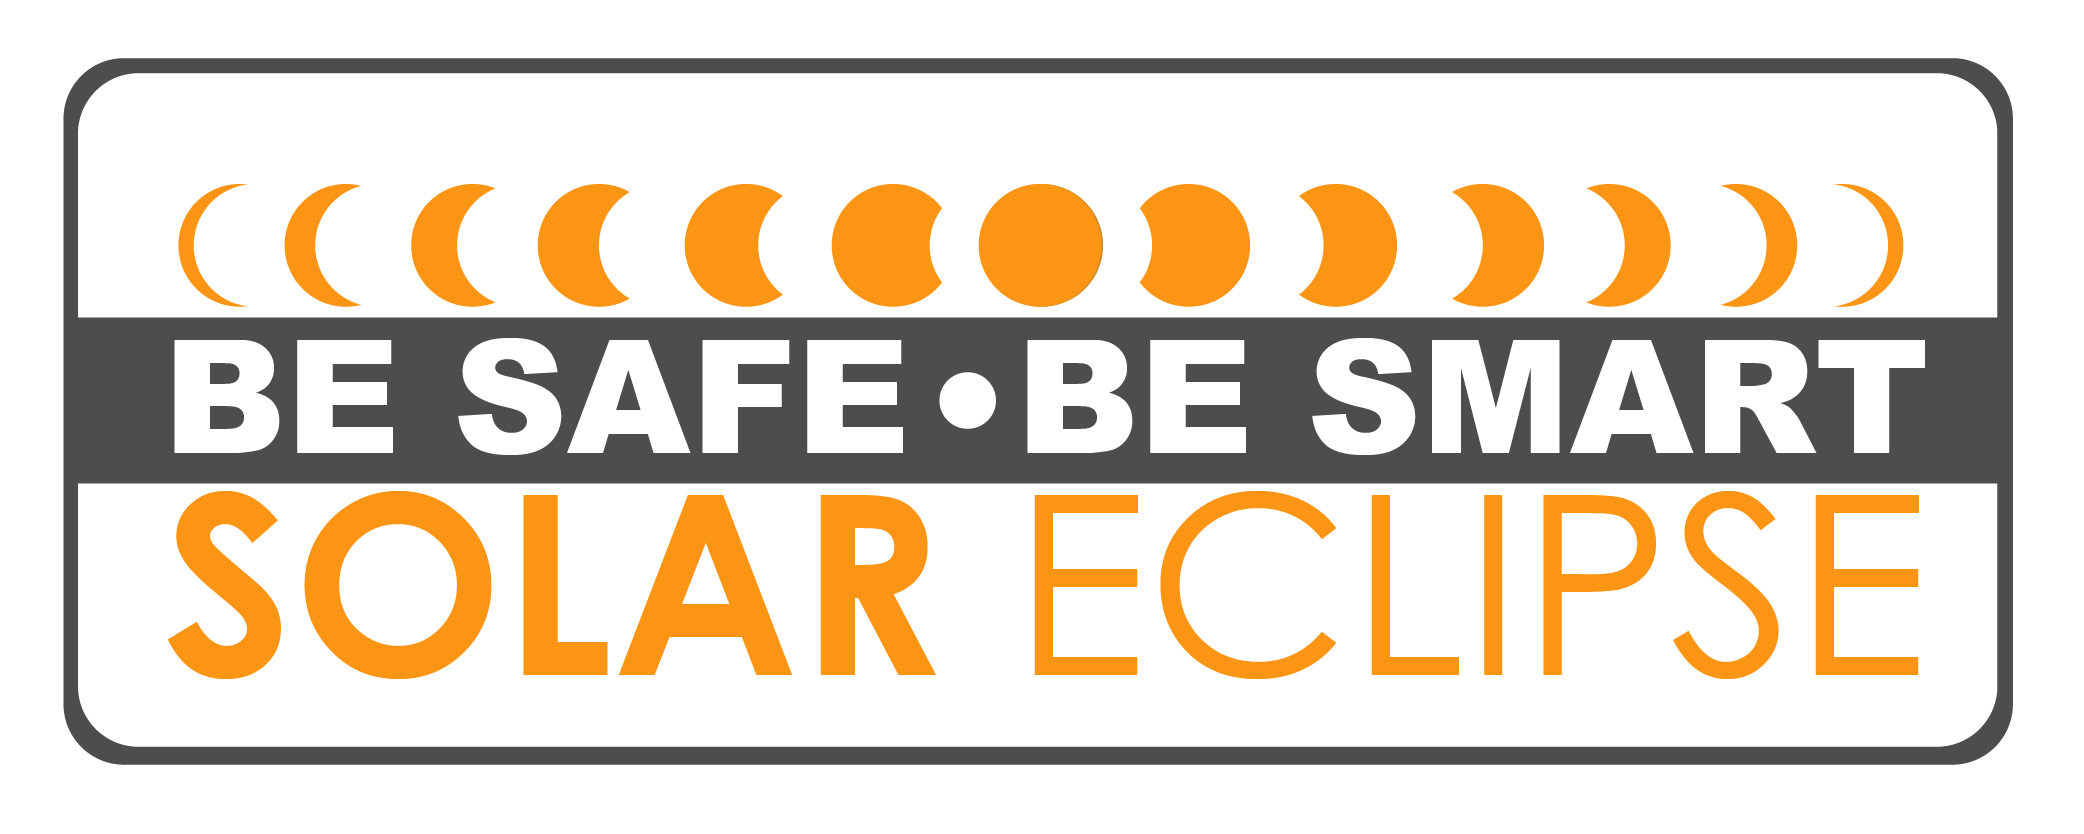 Be Safe Be Smart: Eclipse Safety Tips